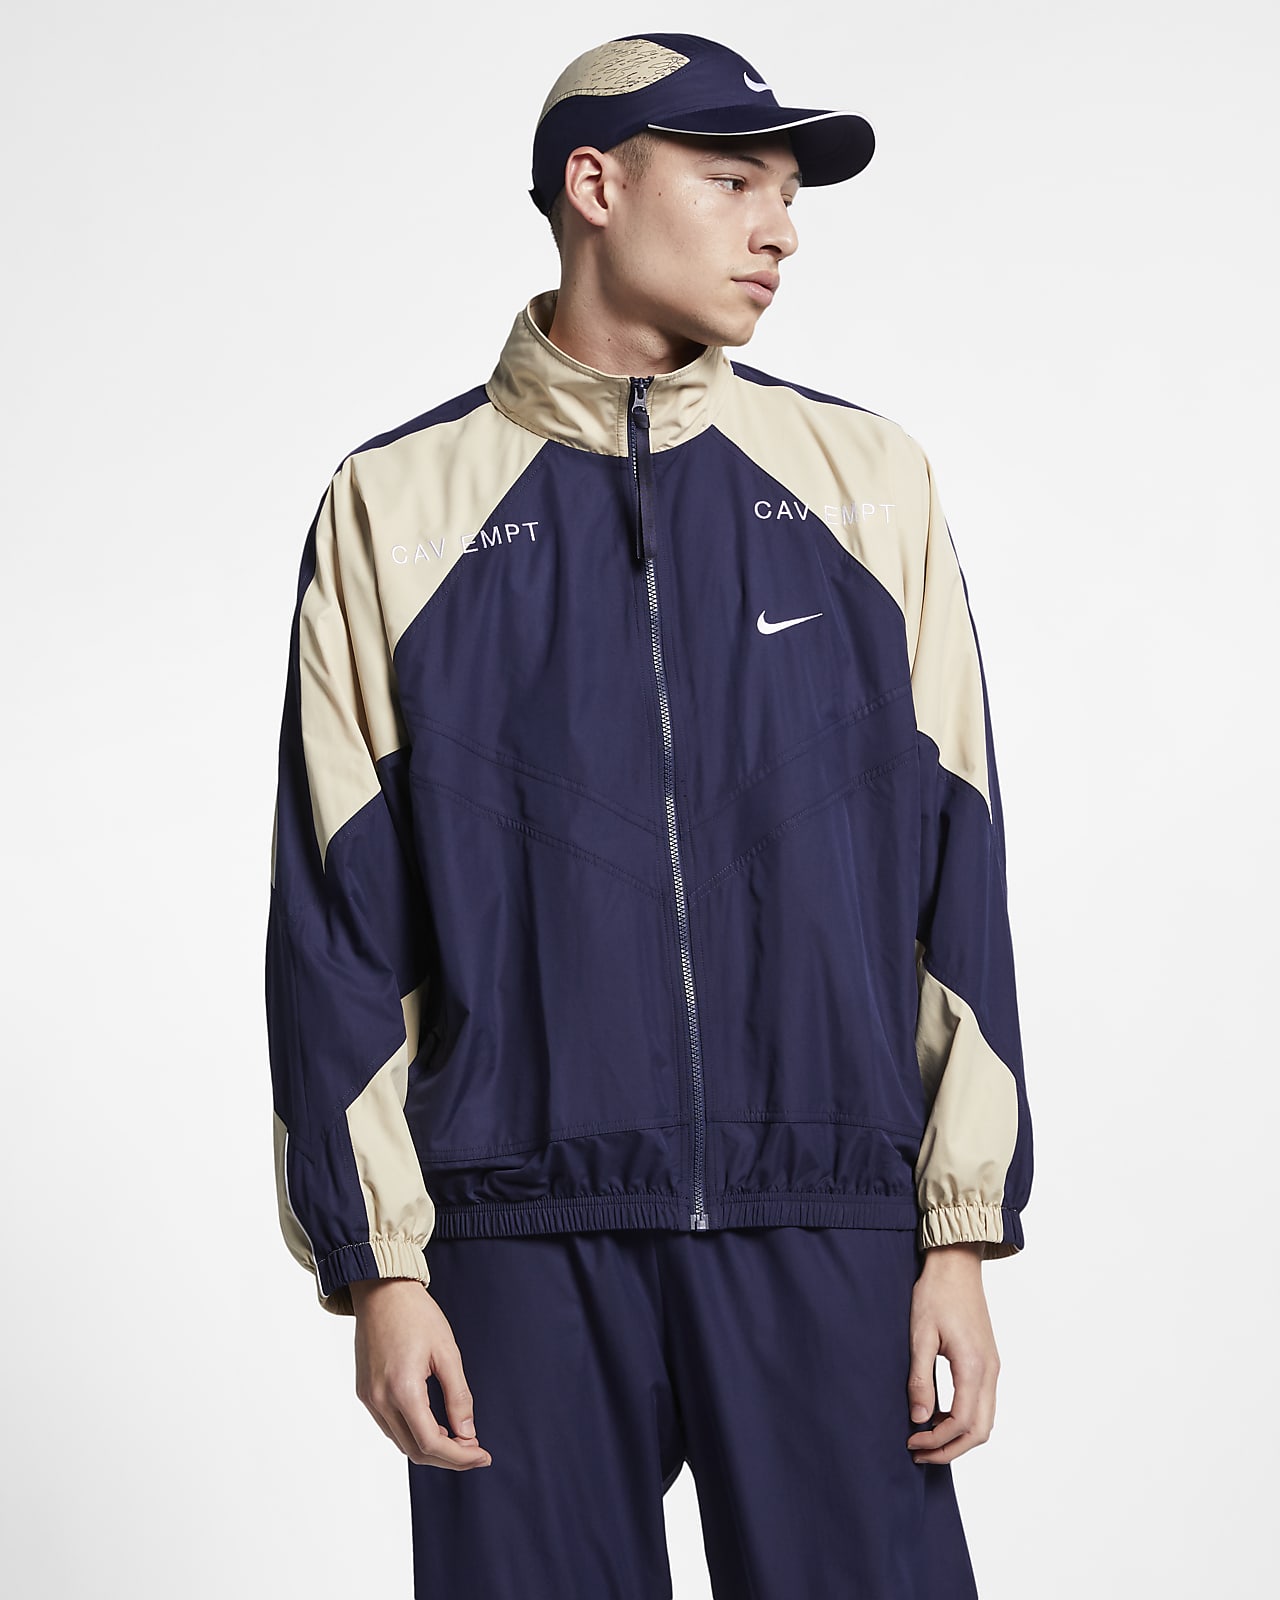 doel zwak Dag Nike X Cav Empt Jacket Britain, SAVE 49% - mpgc.net